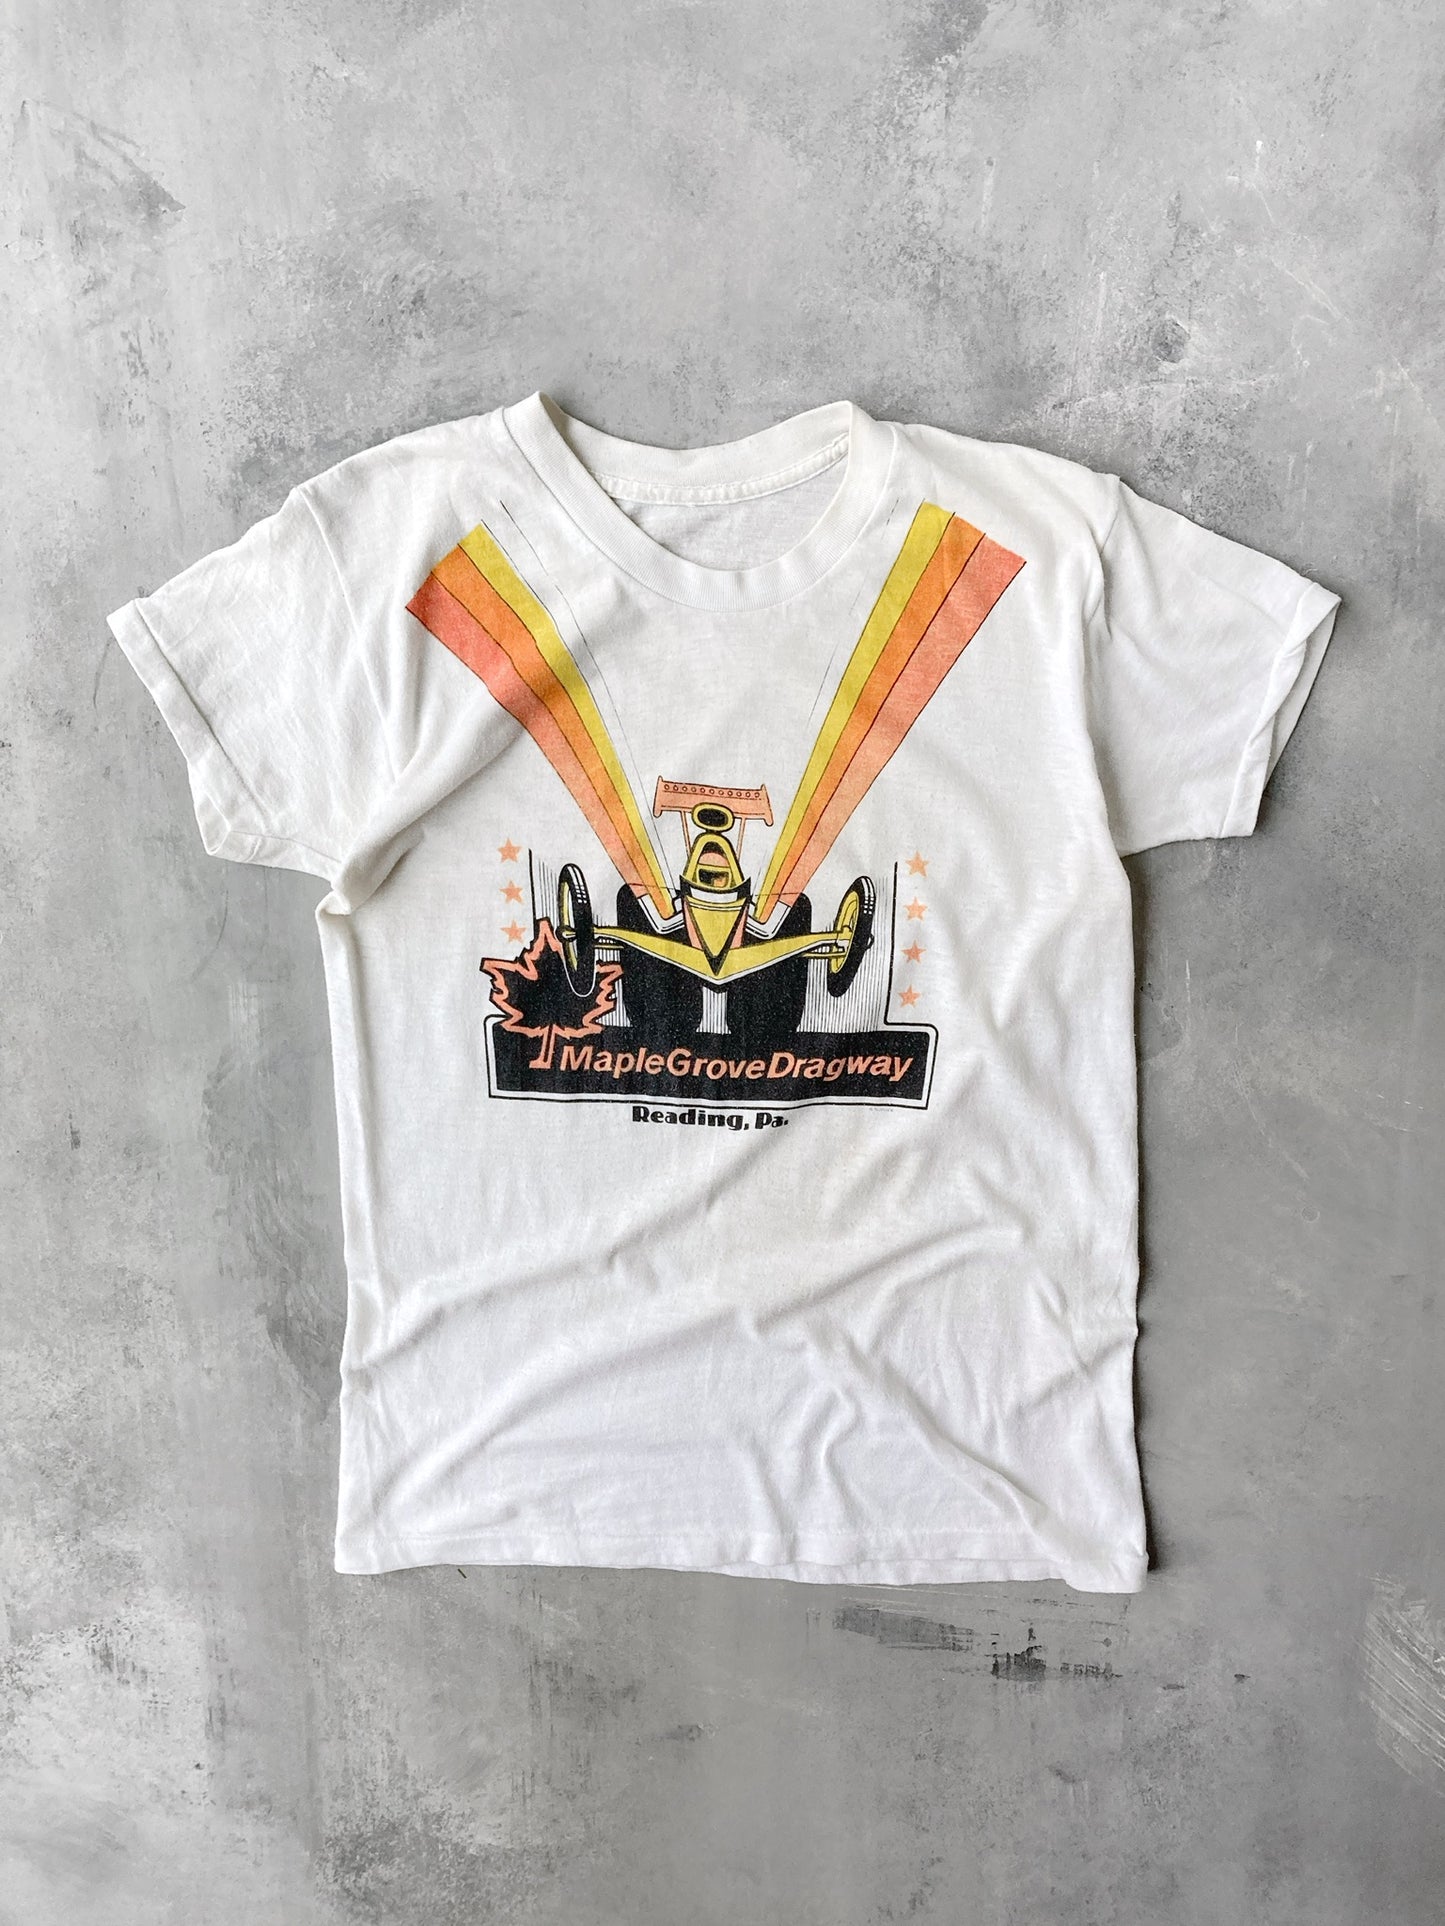 Drag Racing T-Shirt 70's - Small